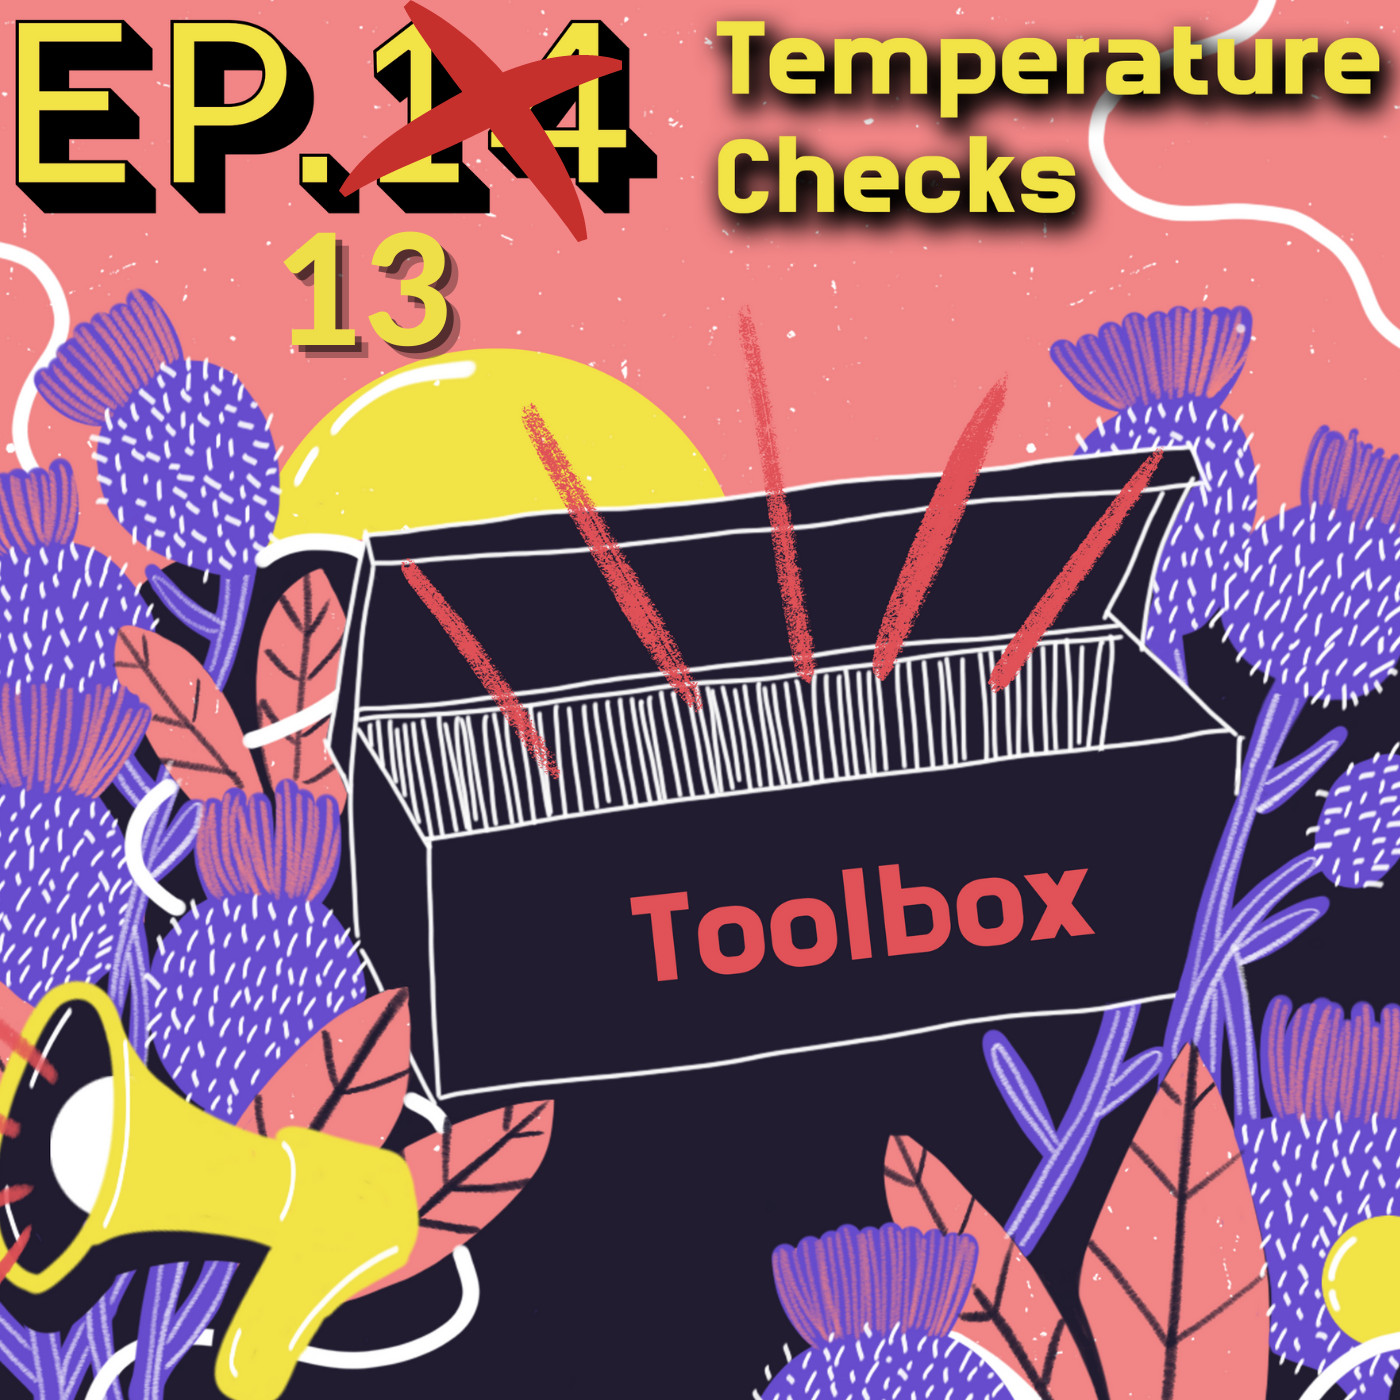 Toolbox: Temperature checks